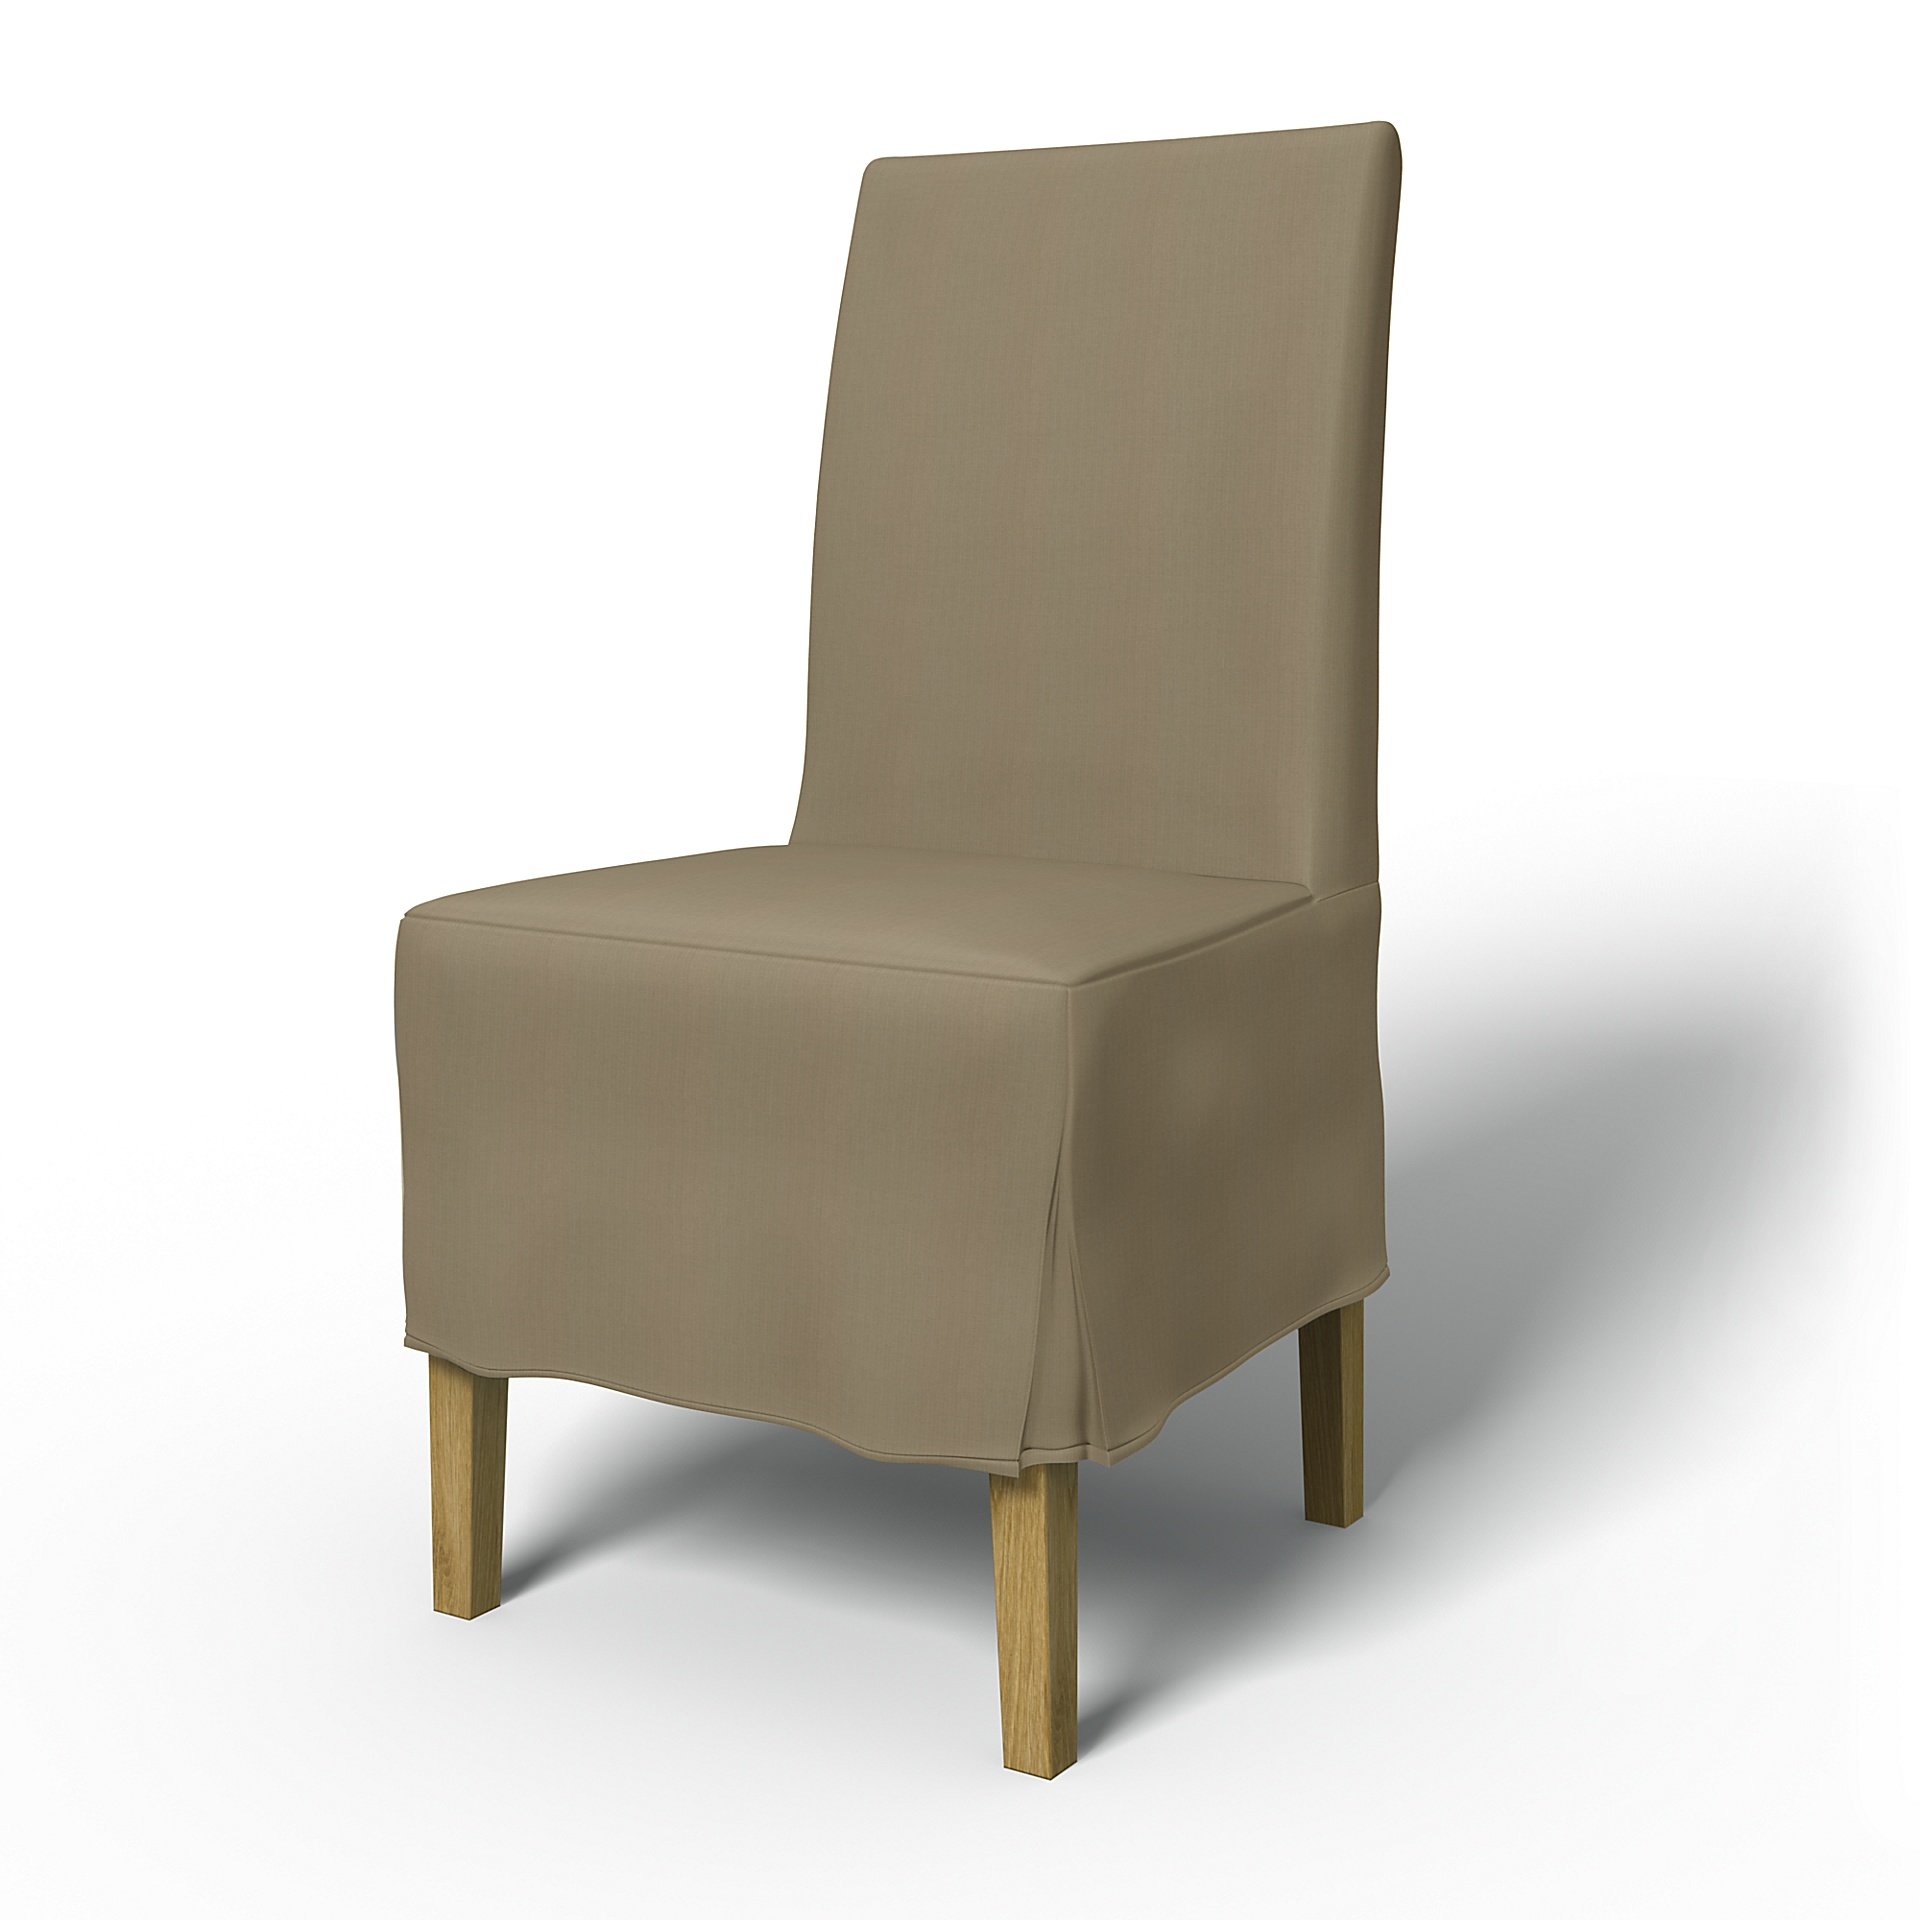 IKEA - Henriksdal Dining Chair Cover Medium skirt with Box Pleat (Standard model), Dark Sand, Outdoo